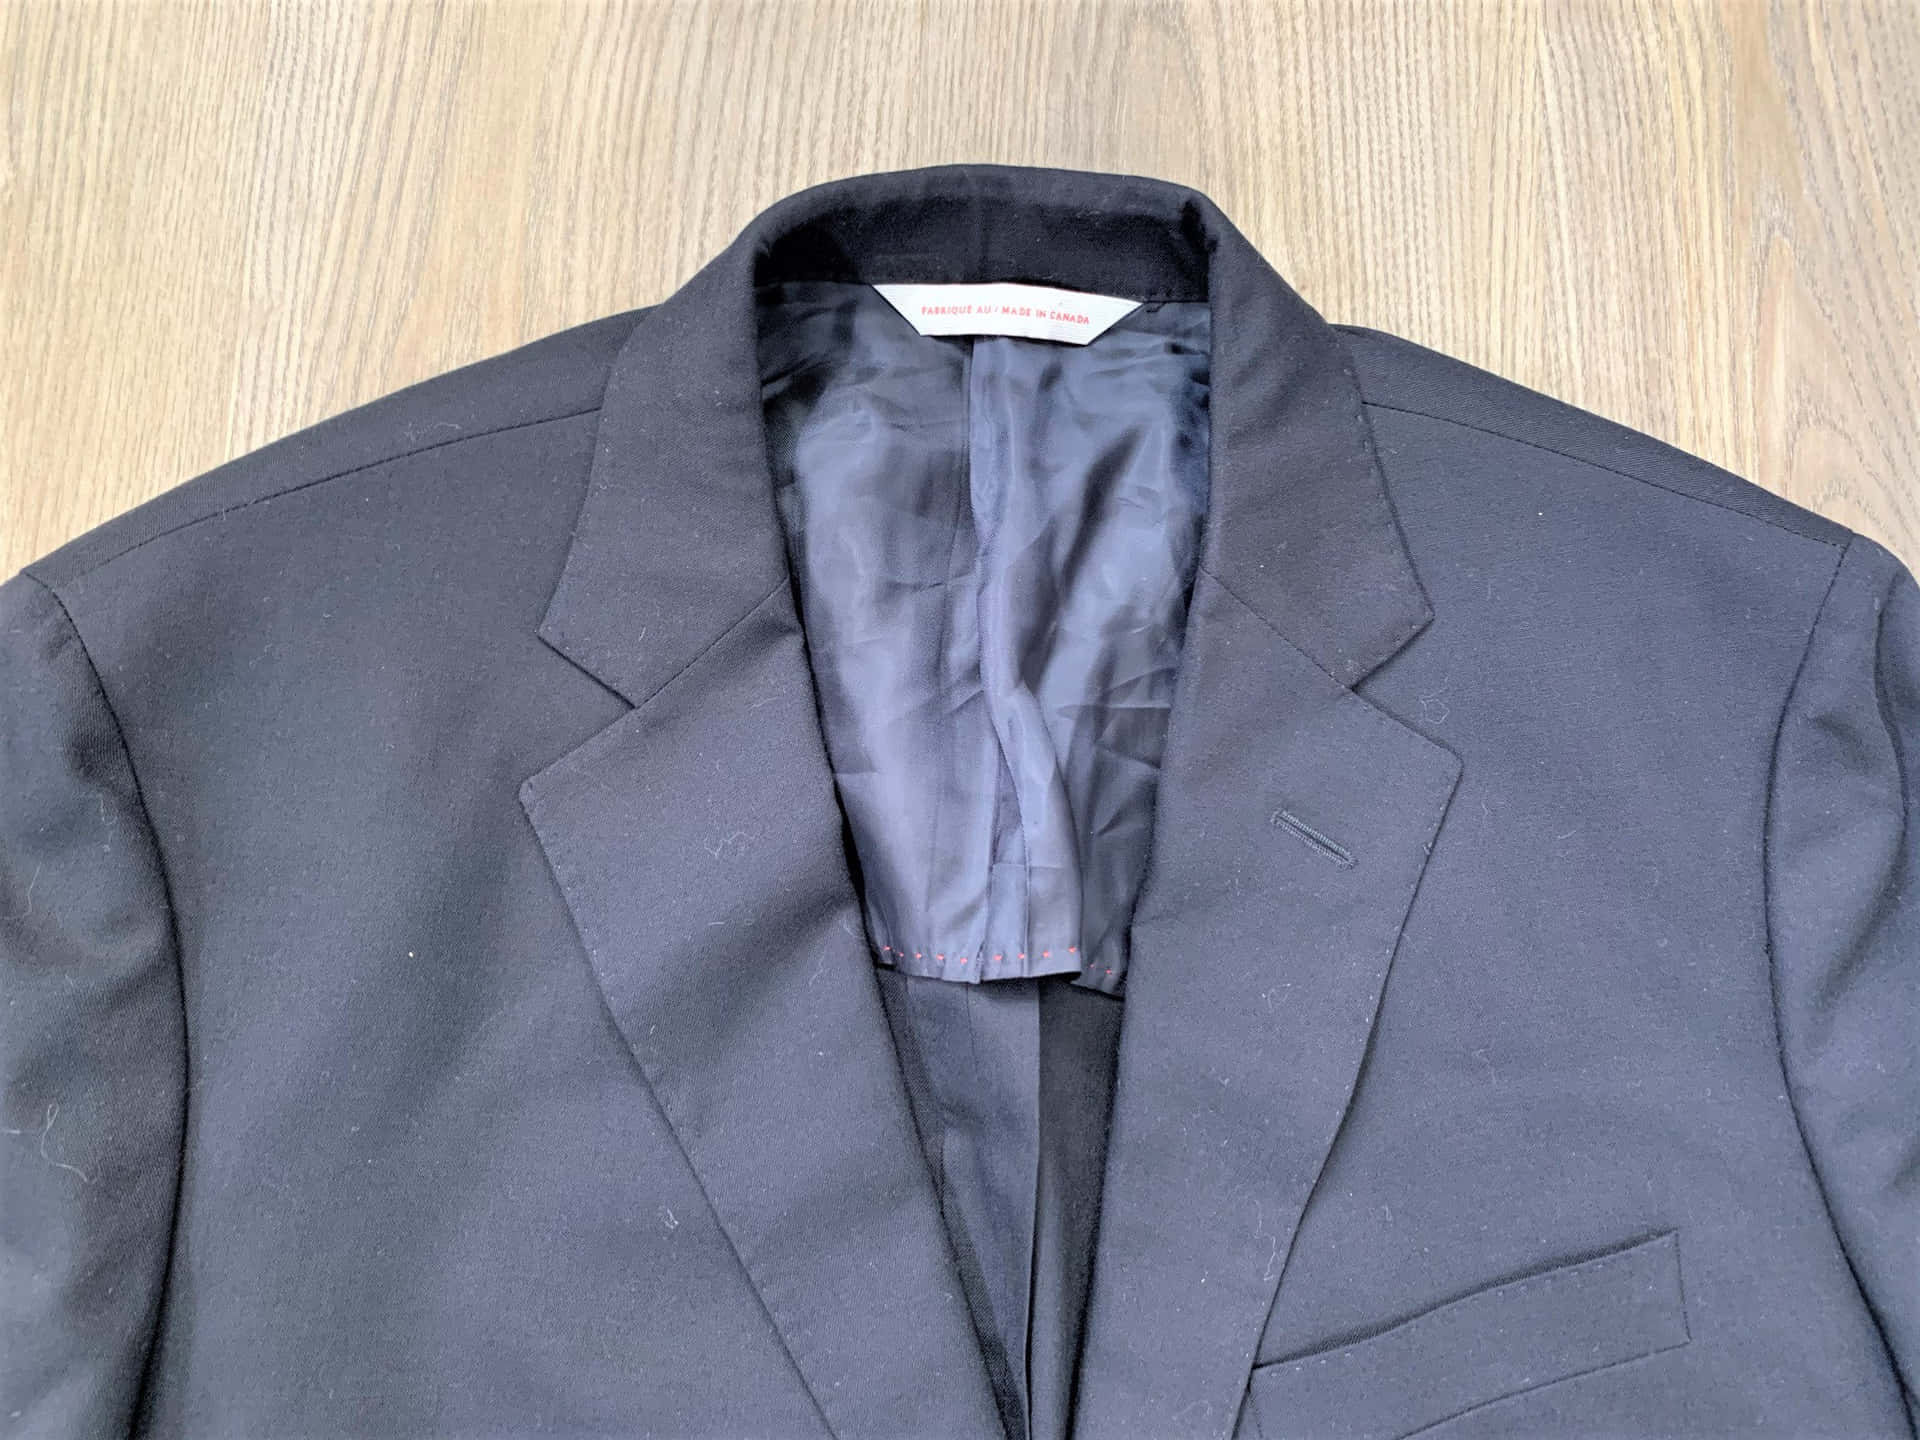 Download The Ultimate Luxury - A Loro Piana Men's Suit Wallpaper ...